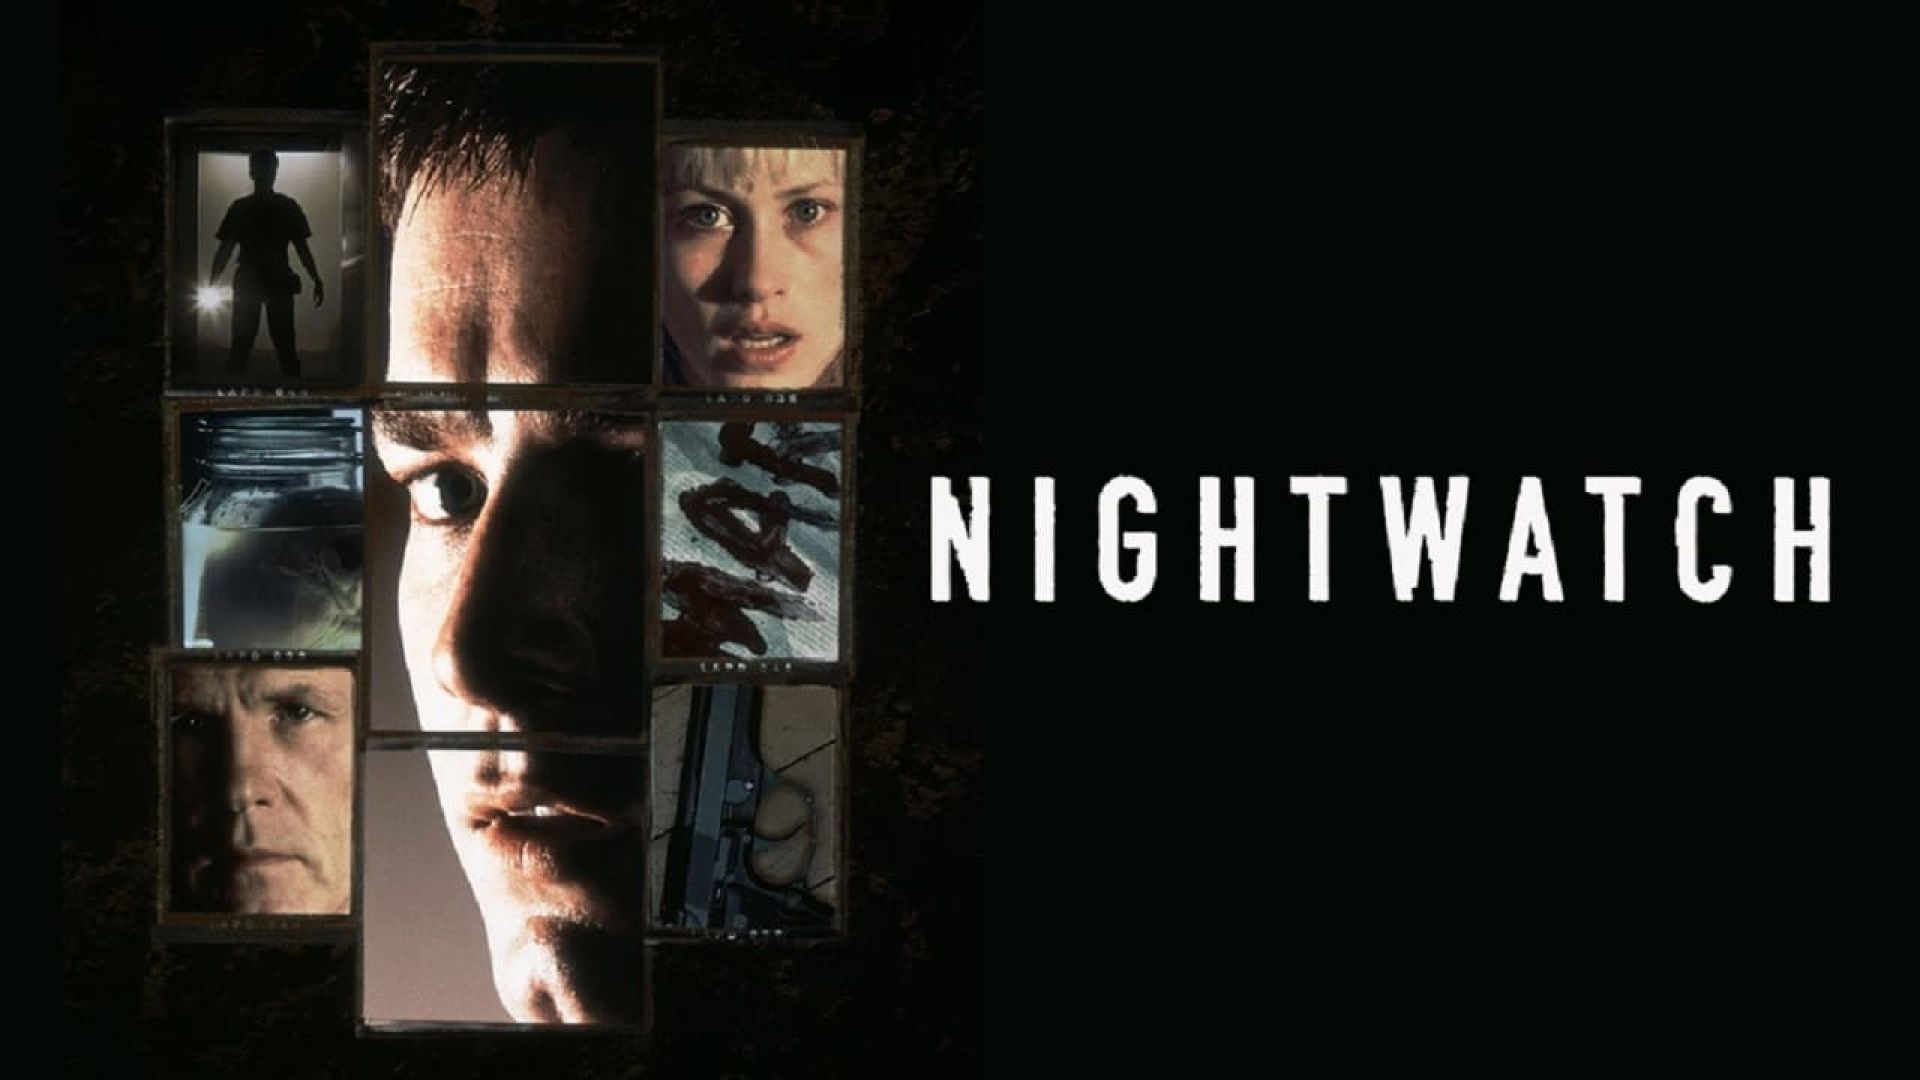 دانلود فیلم Nightwatch 1997